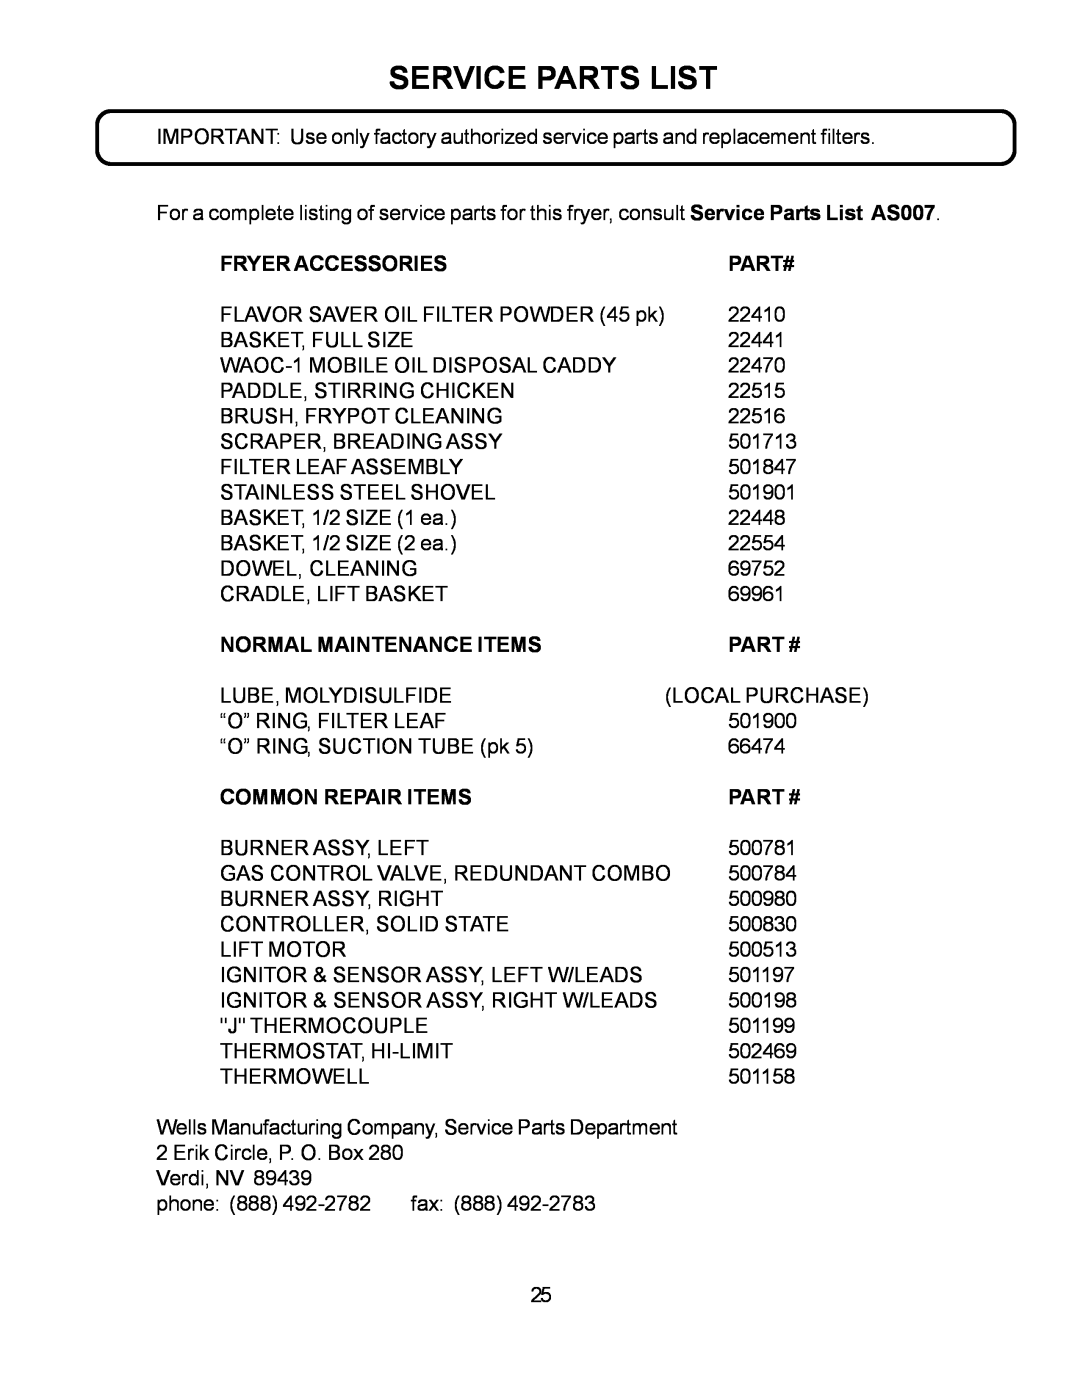 Wells WFGA-60FS service manual Service Parts List, FLAVOR SAVER OIL FILTER POWDER 45 pk, Local Purchase 